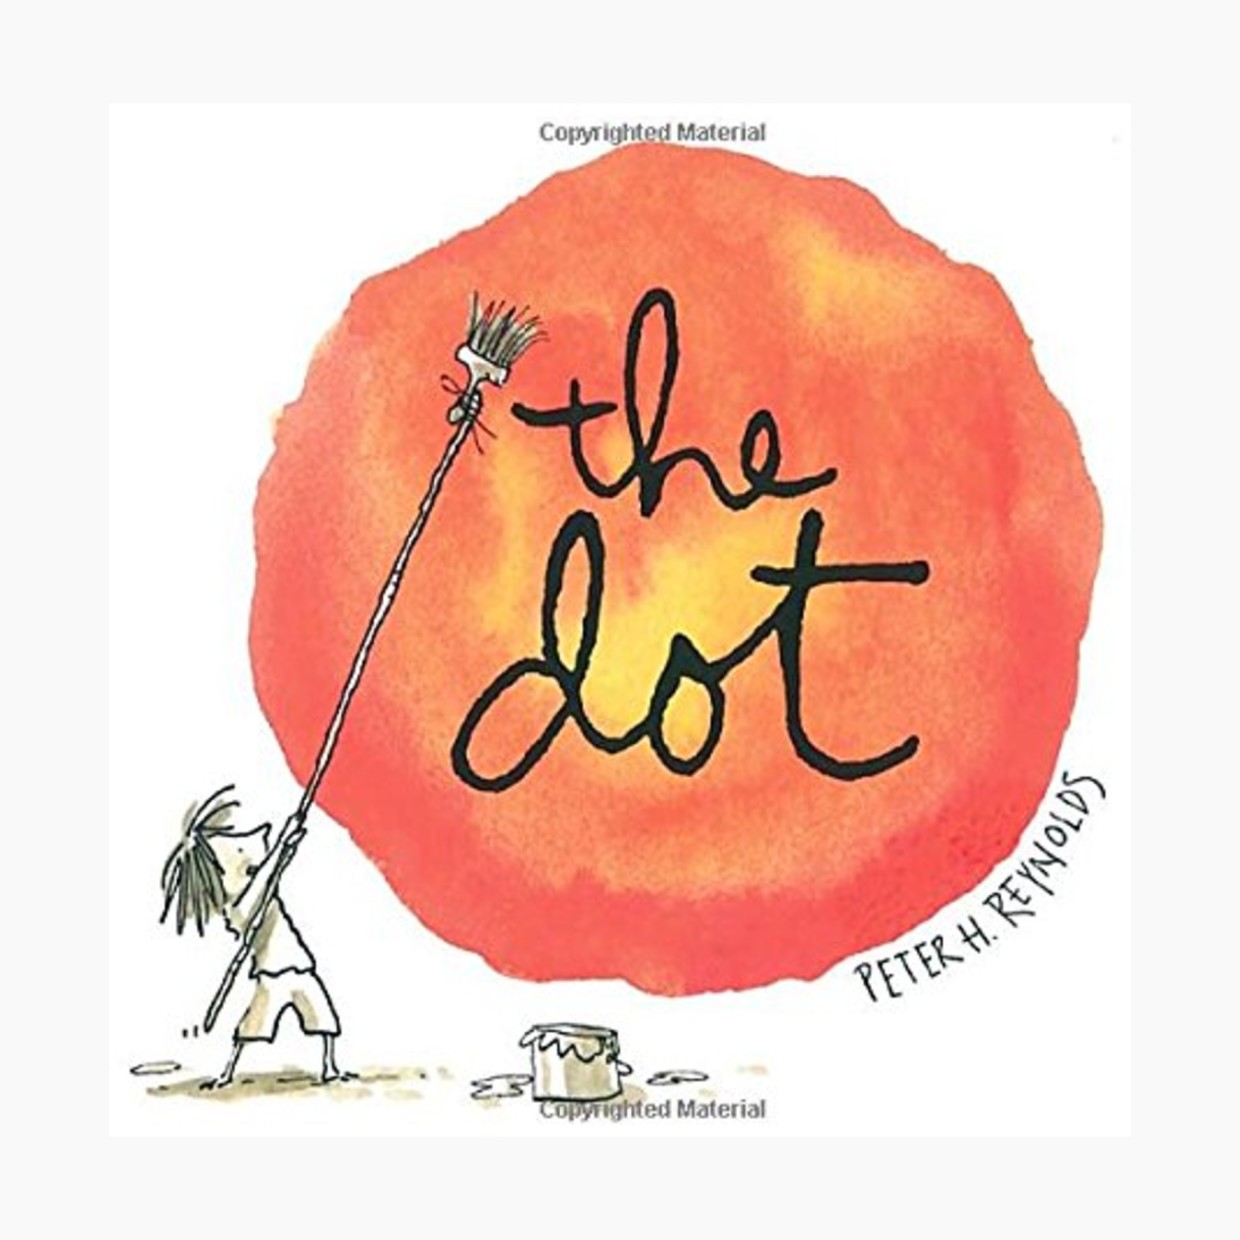 The Dot.